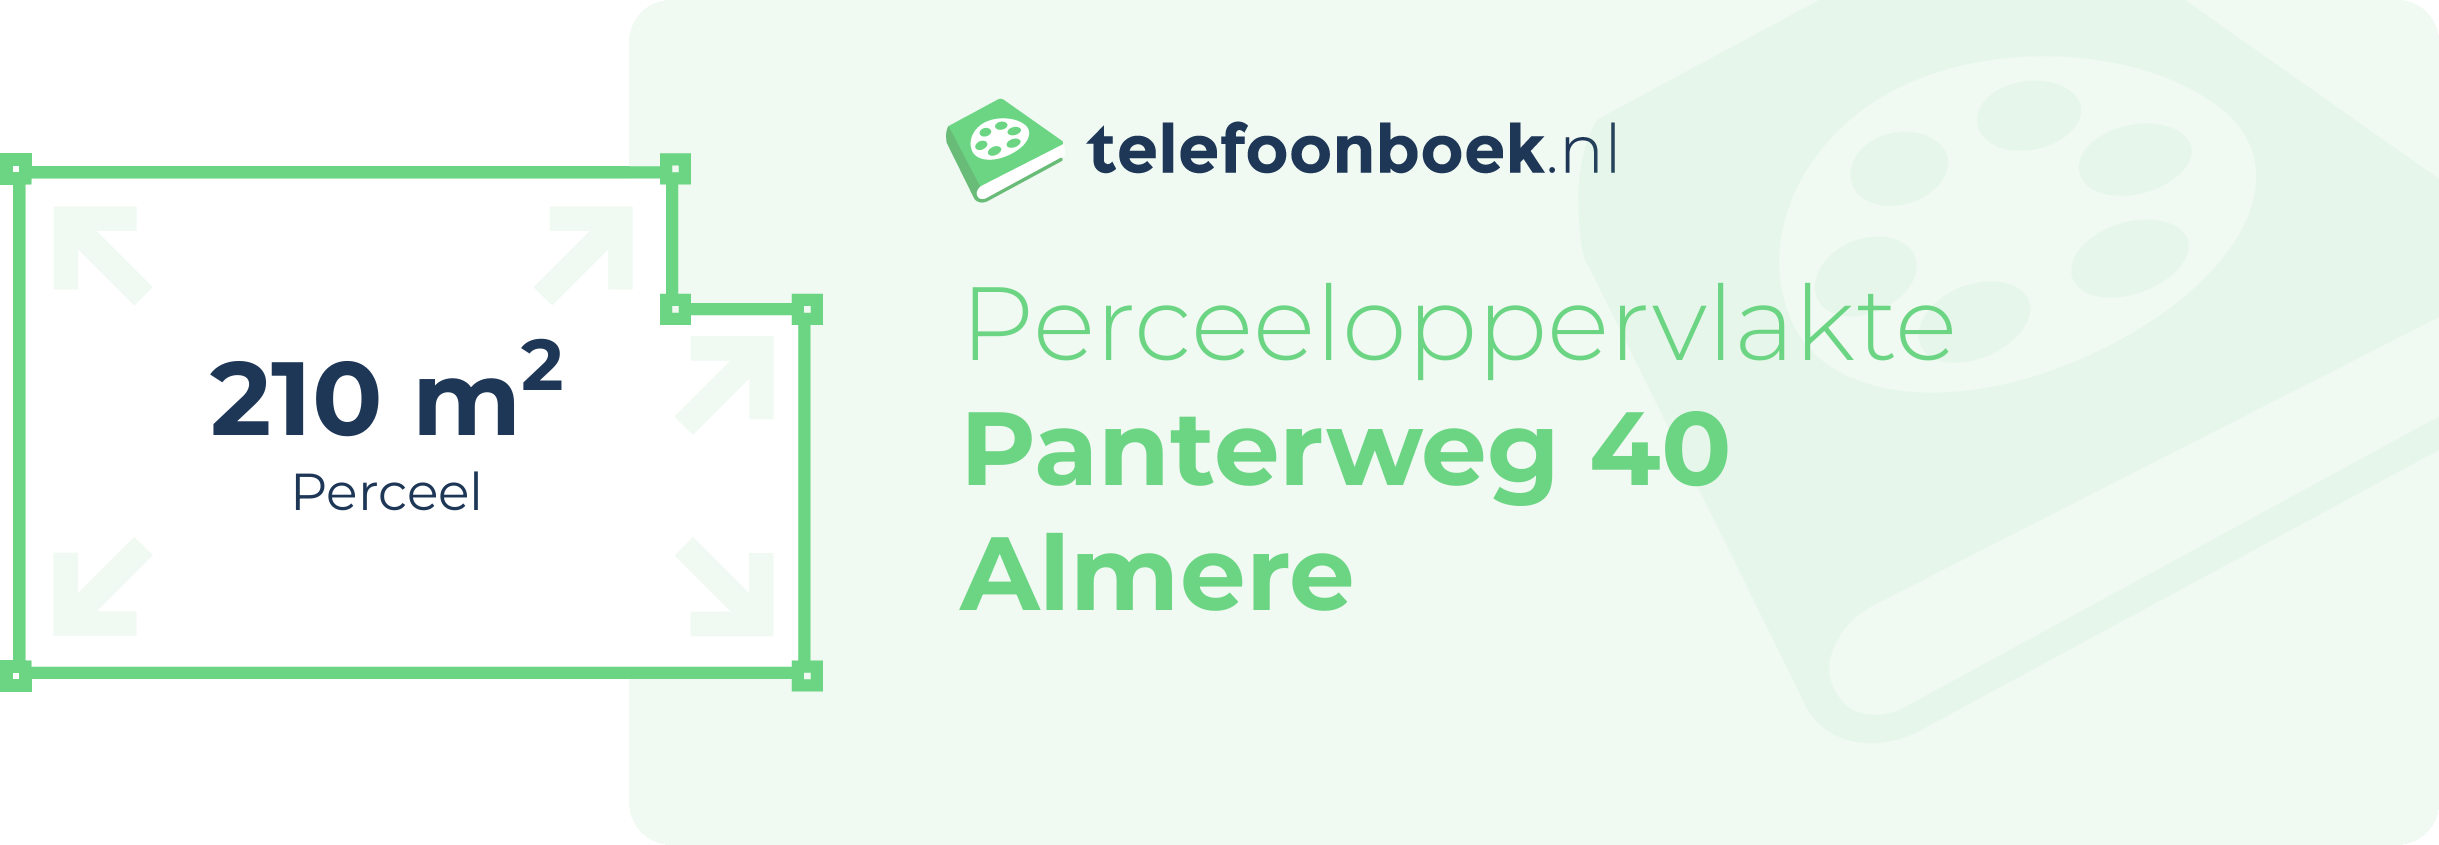 Perceeloppervlakte Panterweg 40 Almere